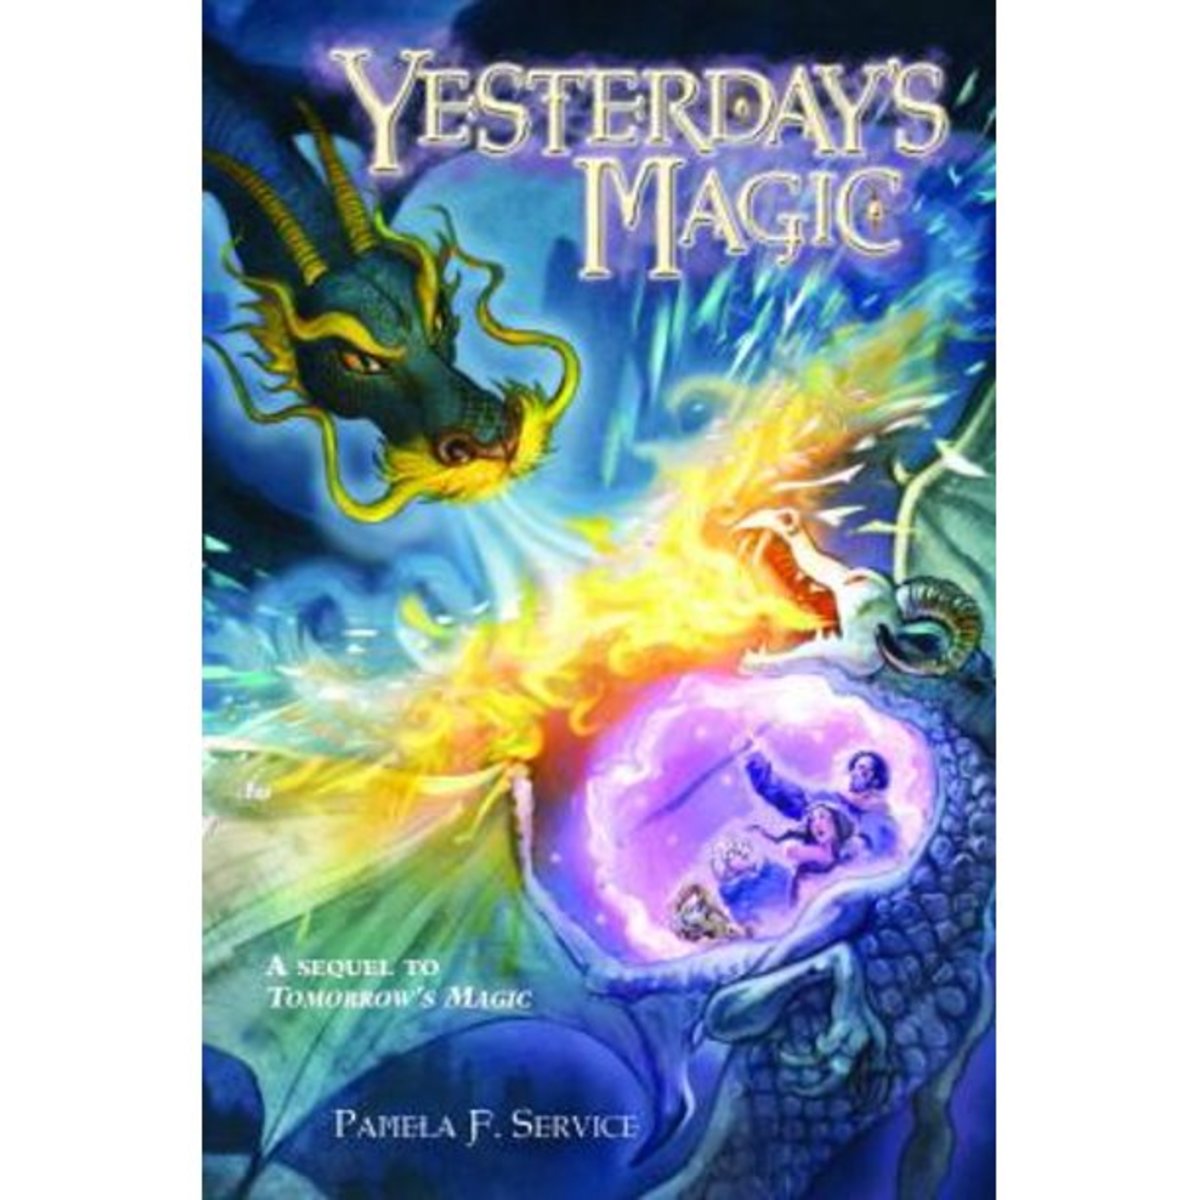 yesterdays-magic-review